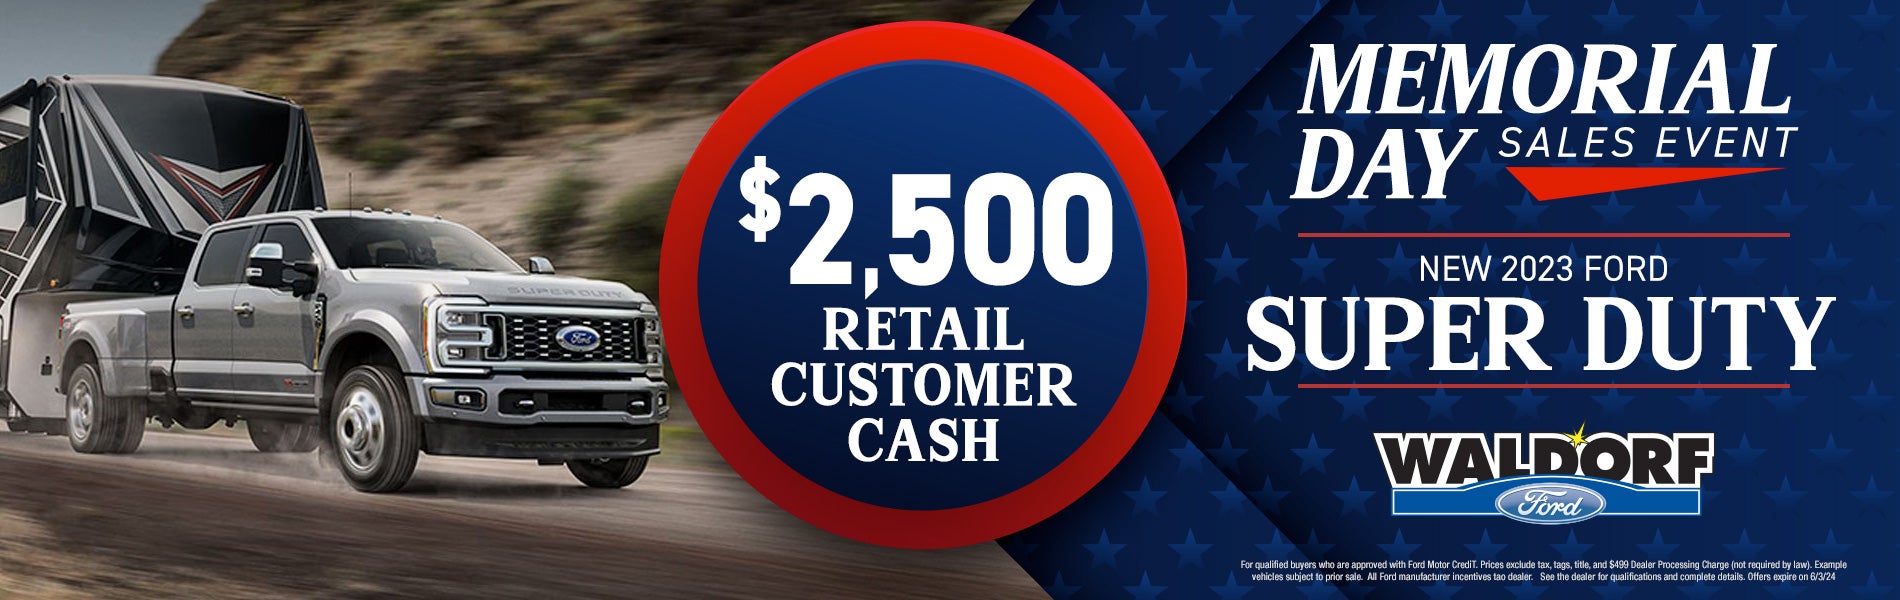 $2,500 Retail Customer Cash on Super Duty!